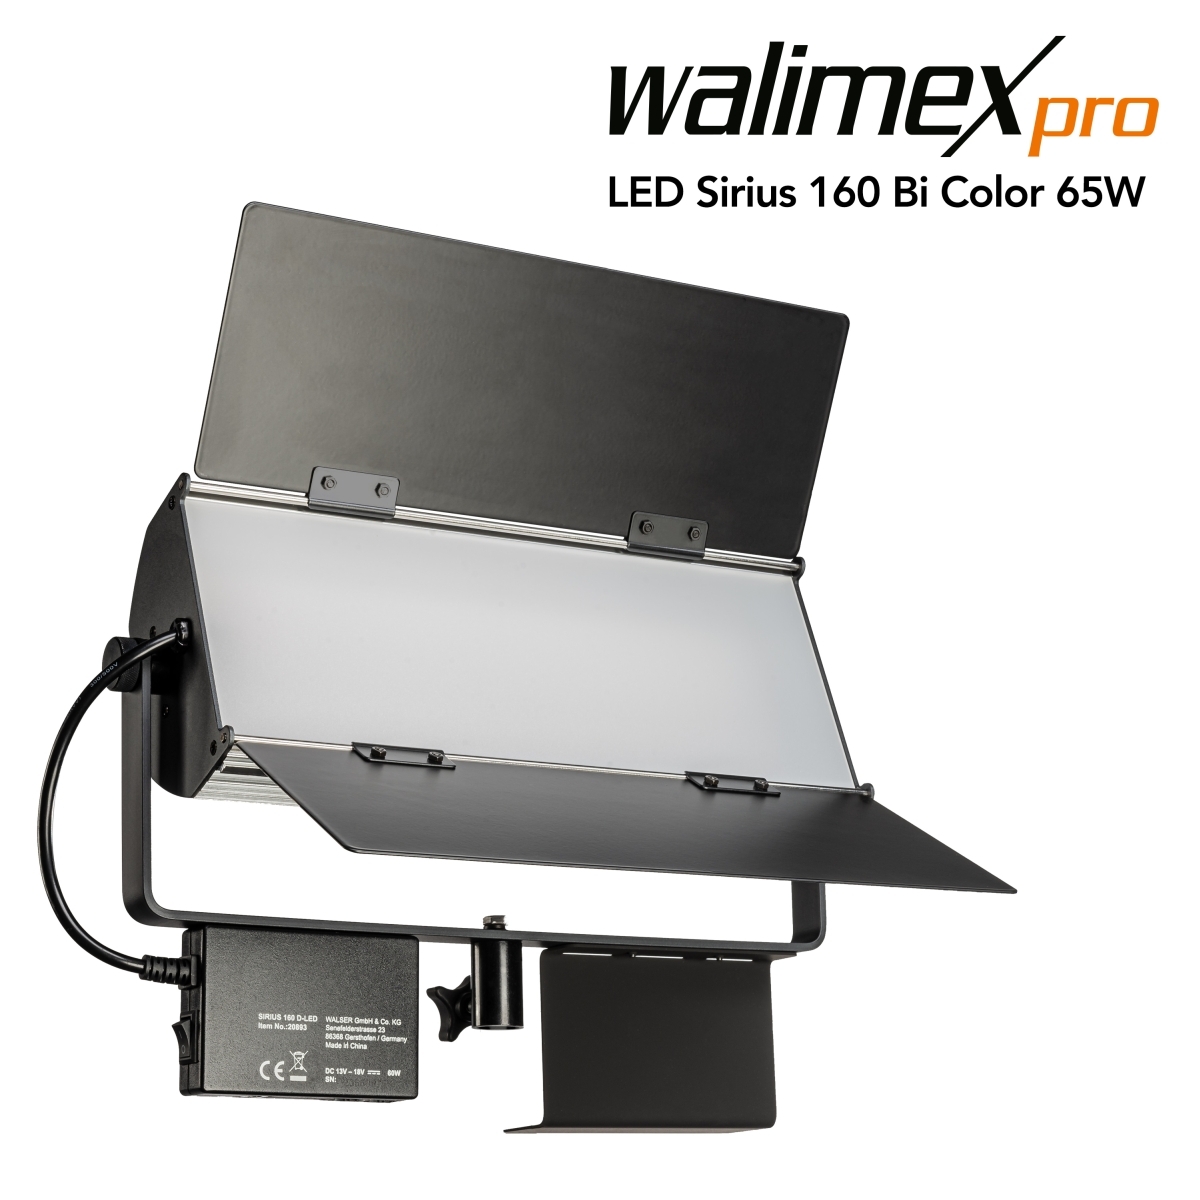 Walimex pro LED Sirius 160 Bi Color Basic